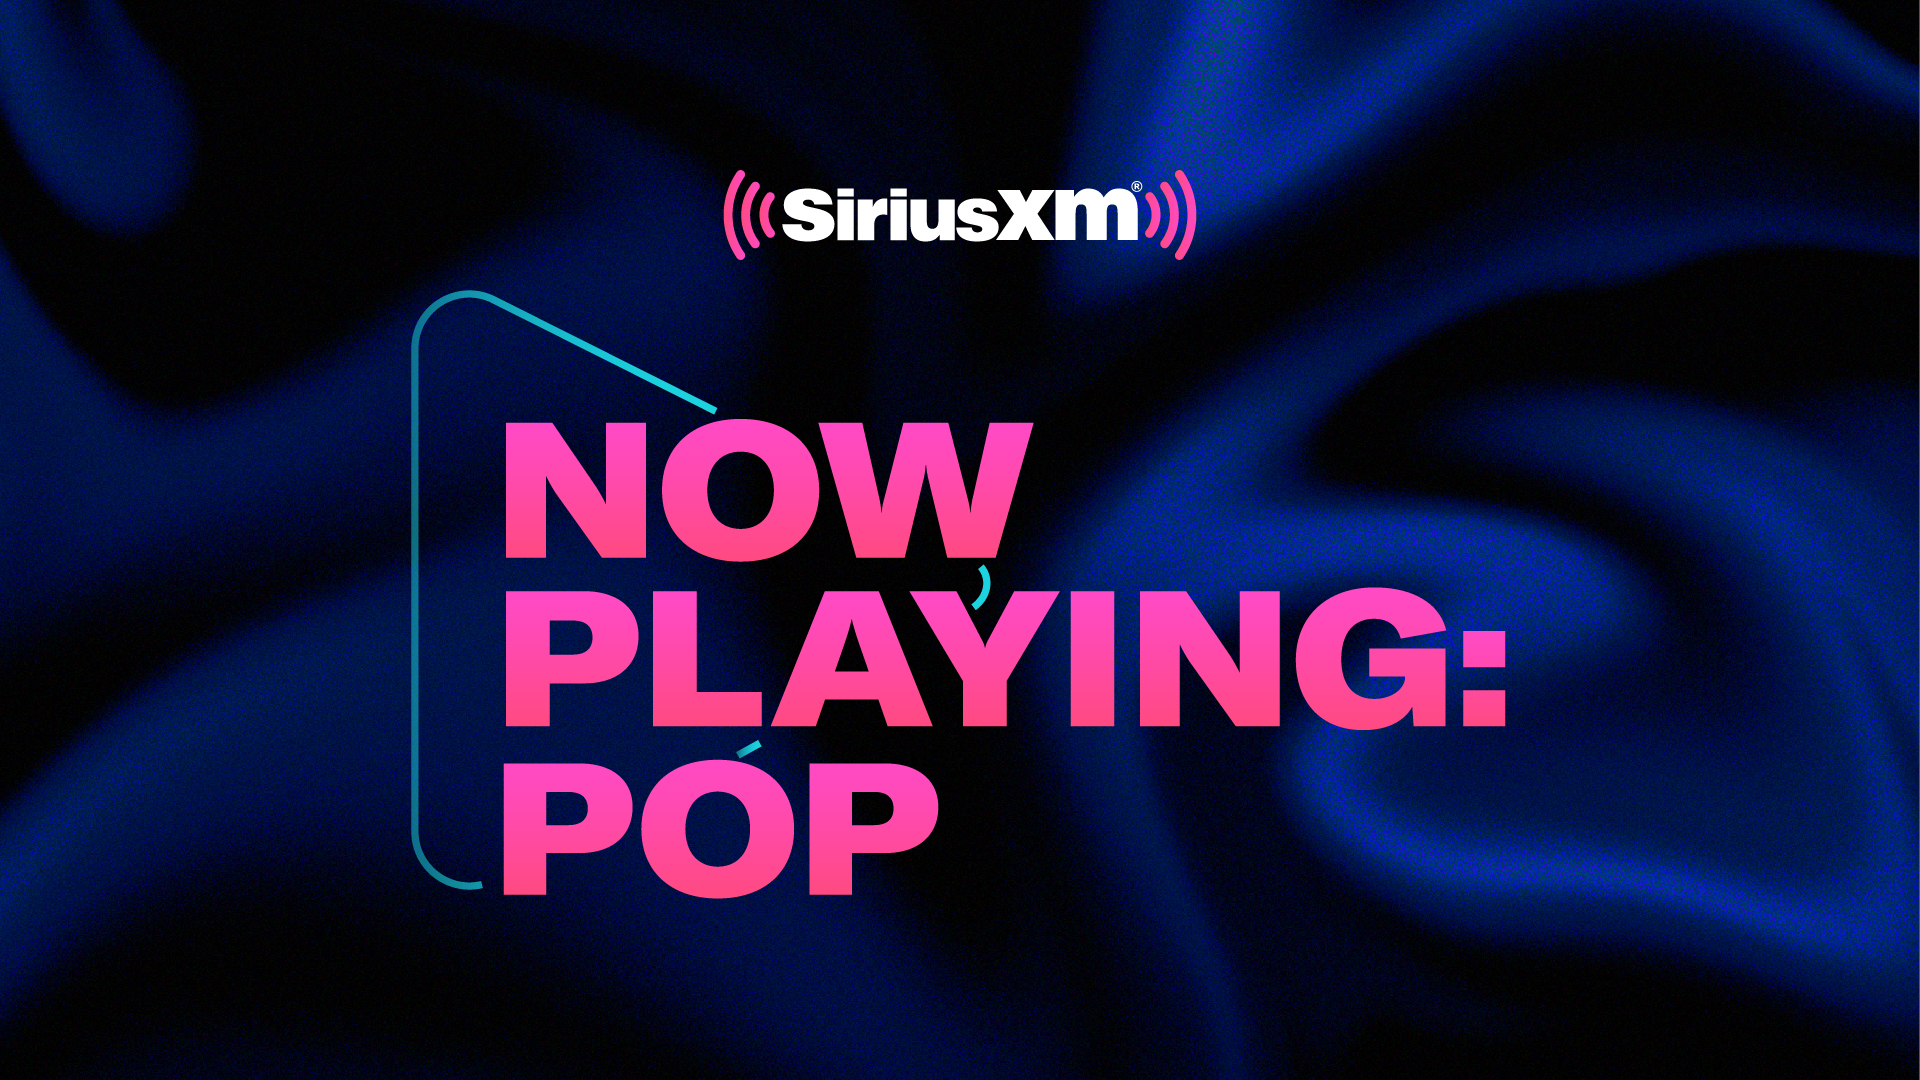 SiriusXM - Now Playing: Pop